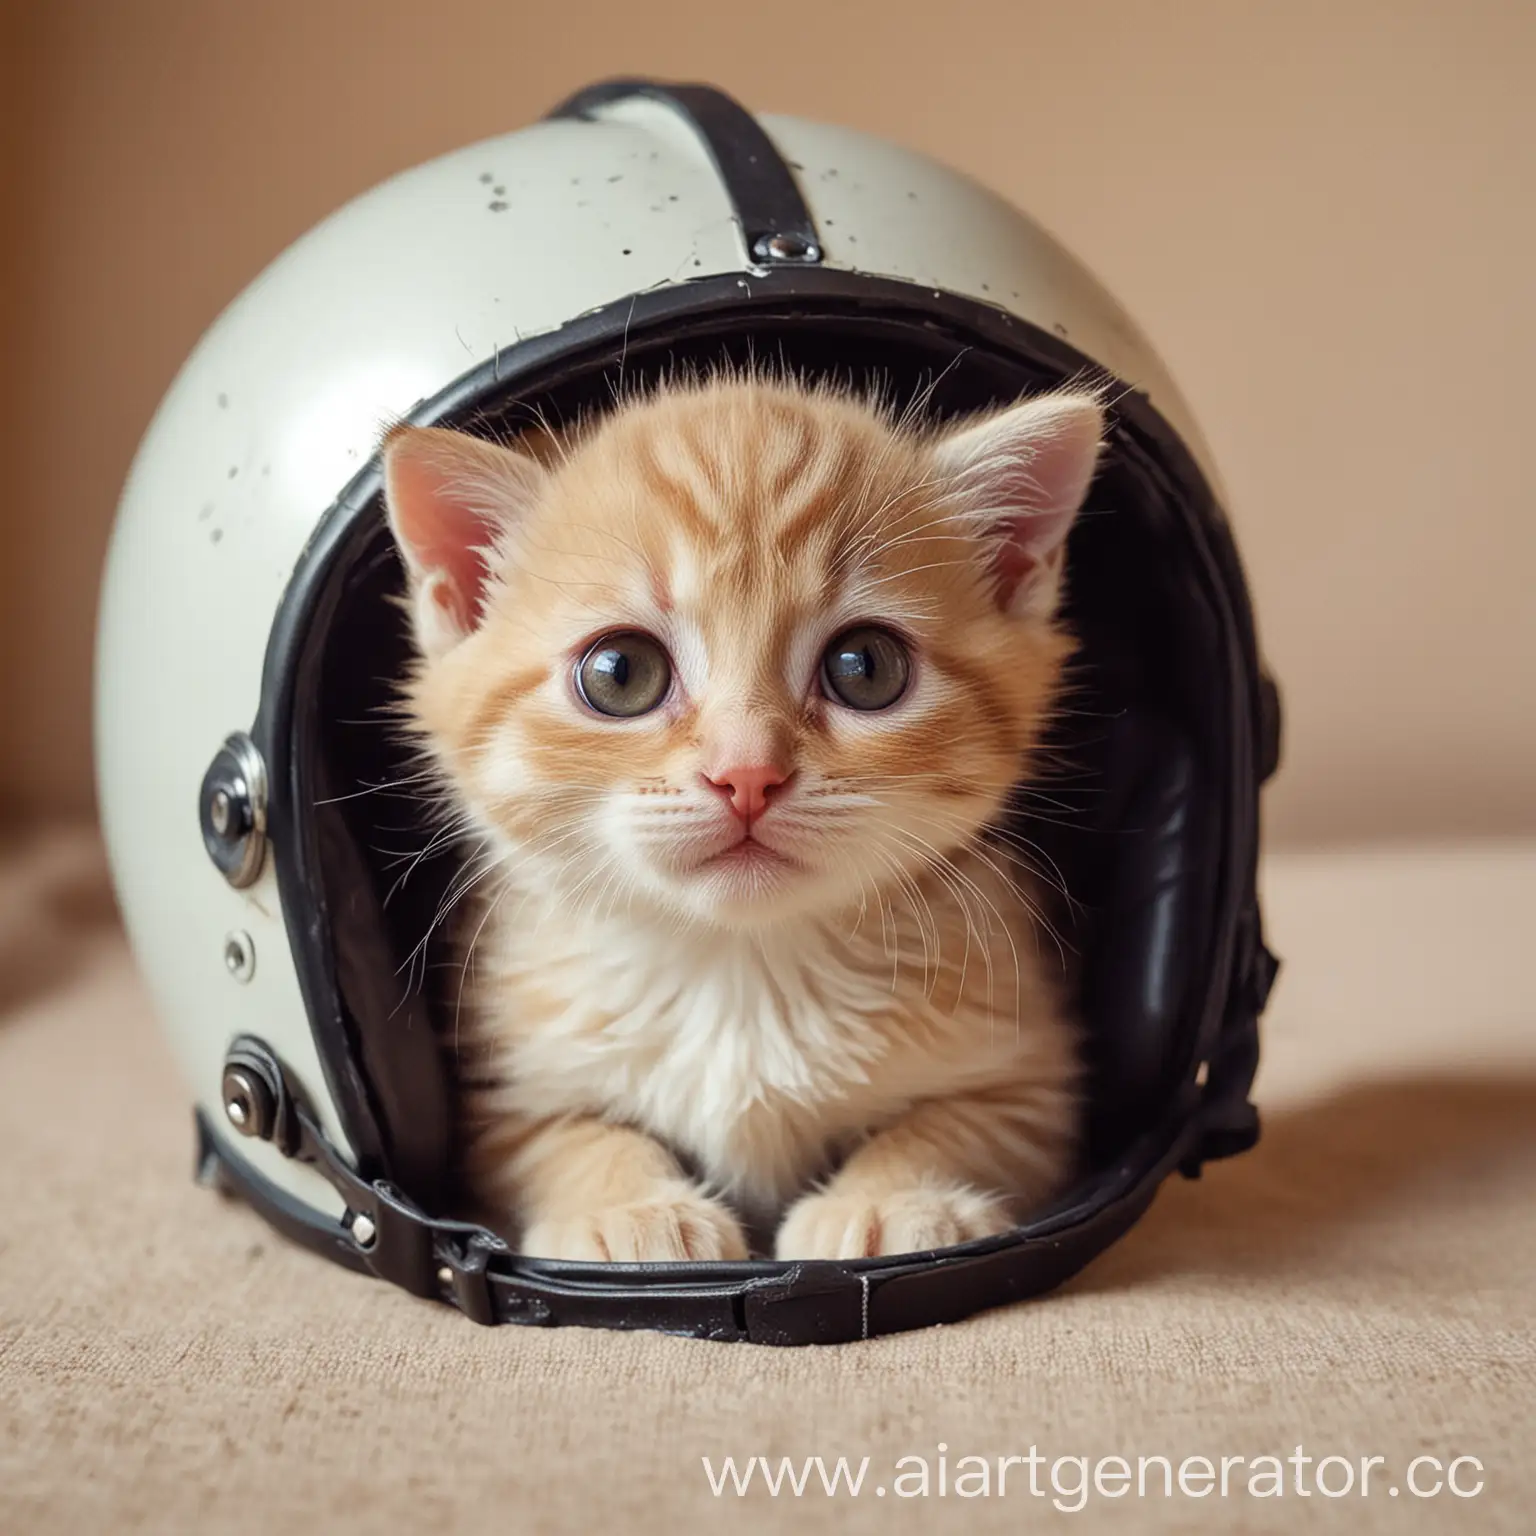 Adorable-Kitten-Wearing-a-Protective-Helmet